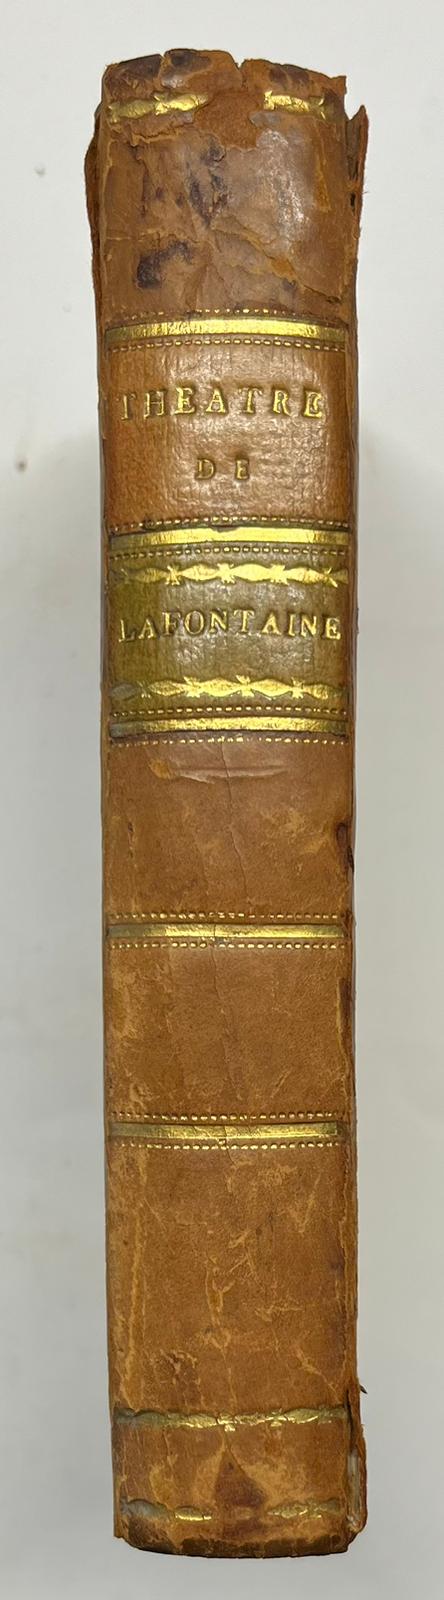 La Fontaine, 1809, French | Oeuvres de La Fontaine, Oeuvres Diverse de la Fontaine, Paris, Imprimerie de Mame, Frères, 1809, 412 pp. Three volumes, fine set.